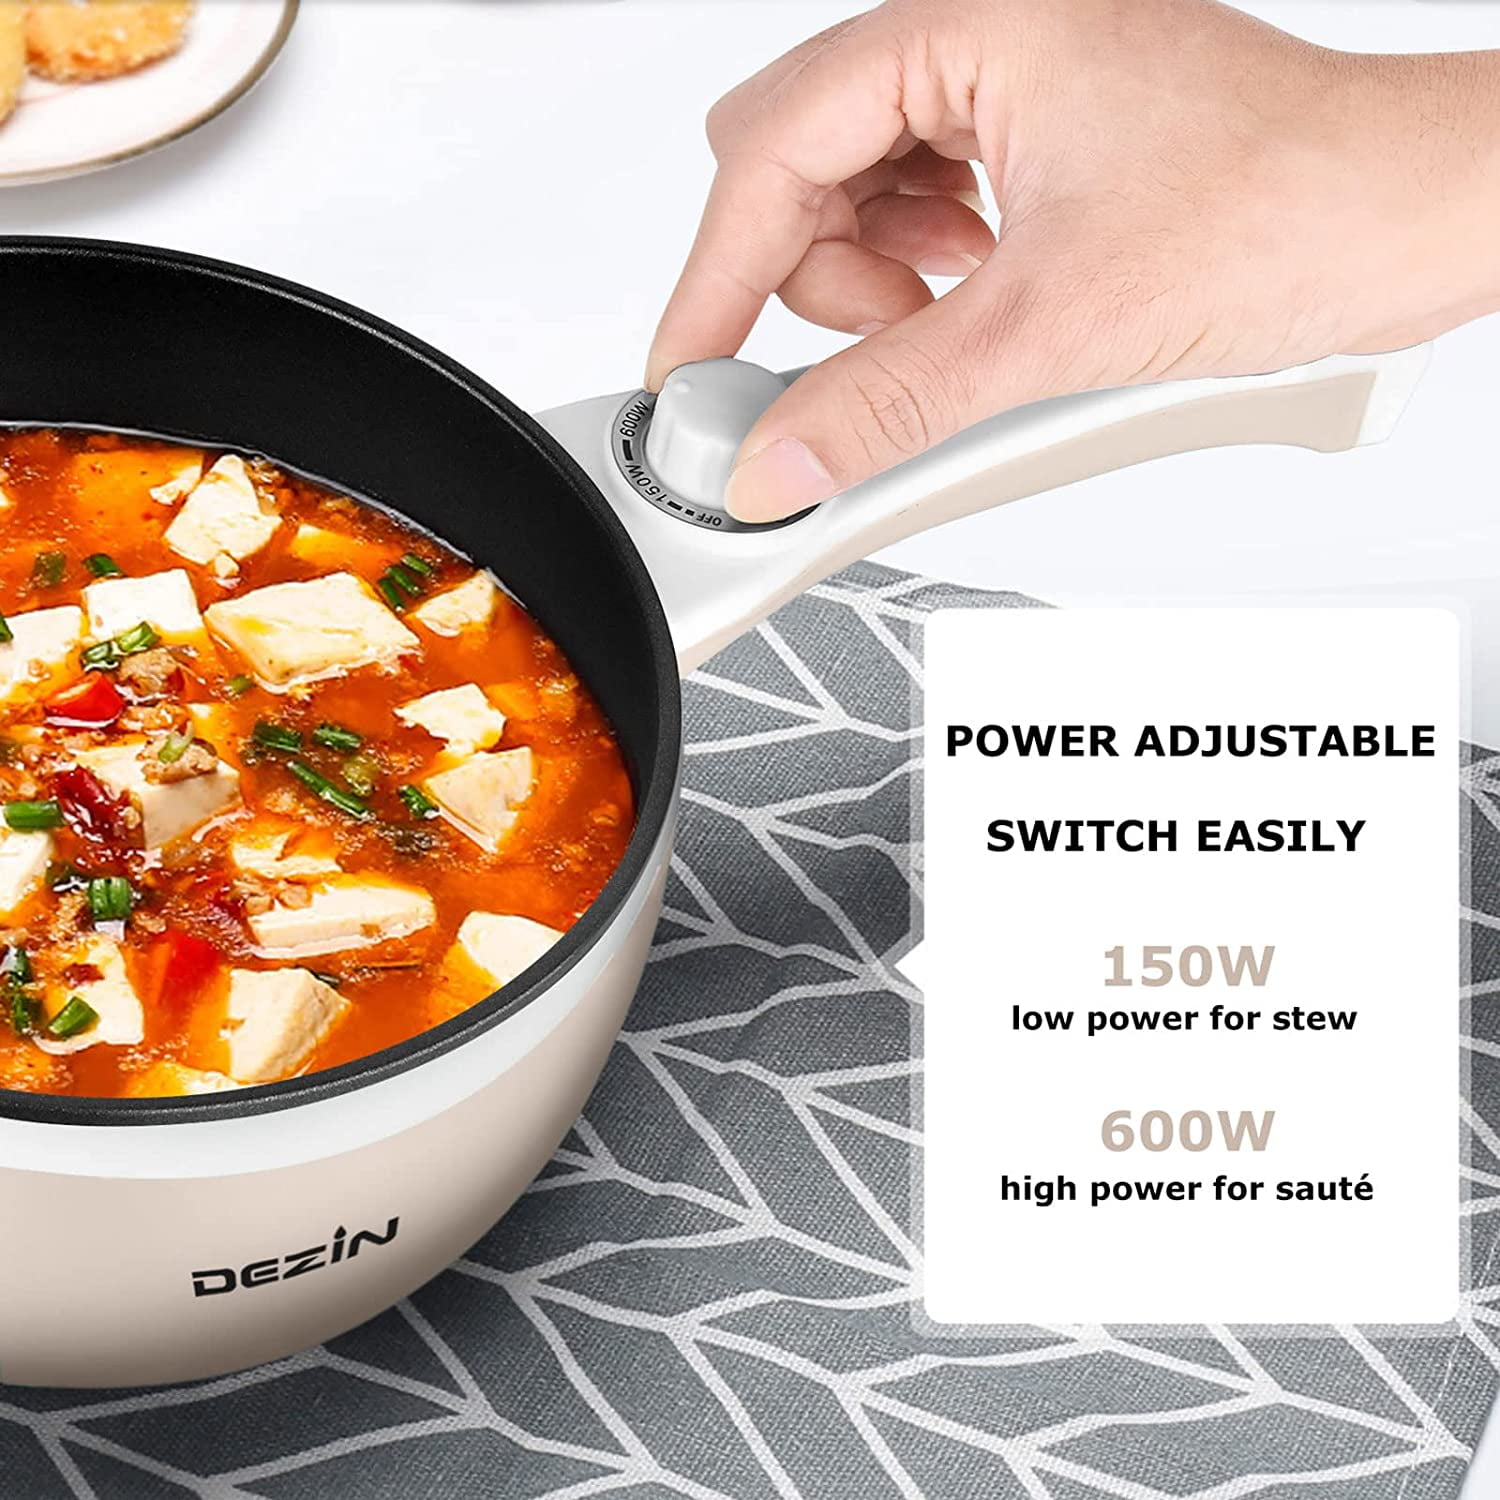 Dezin Hot Pot Electric, Rapid Noodles Cooker, Stainless Steel Electric Pot  1.6 Liter, Perfect for Ramen, Egg, Pasta, Dumpling, Soup, Porridge, Oatmeal